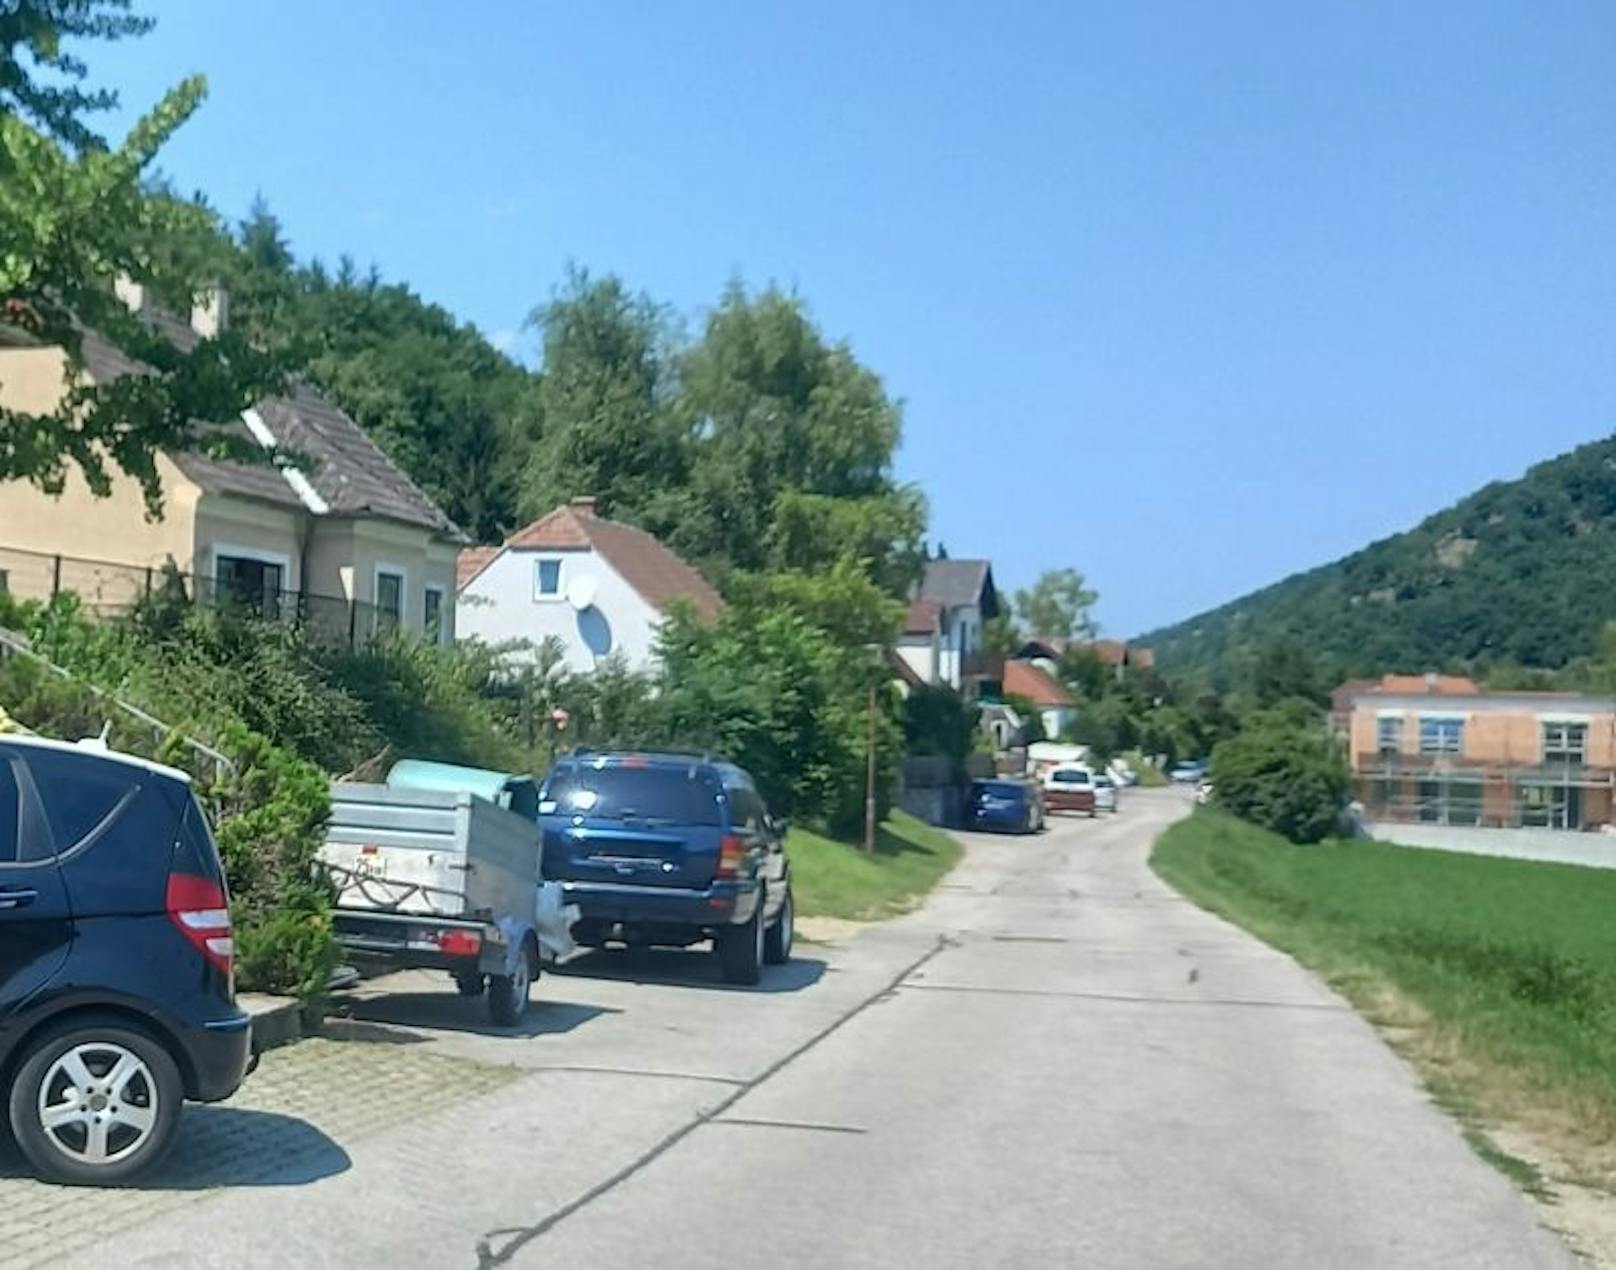 Parksituation in Paudorf: Dann wurde gestraft